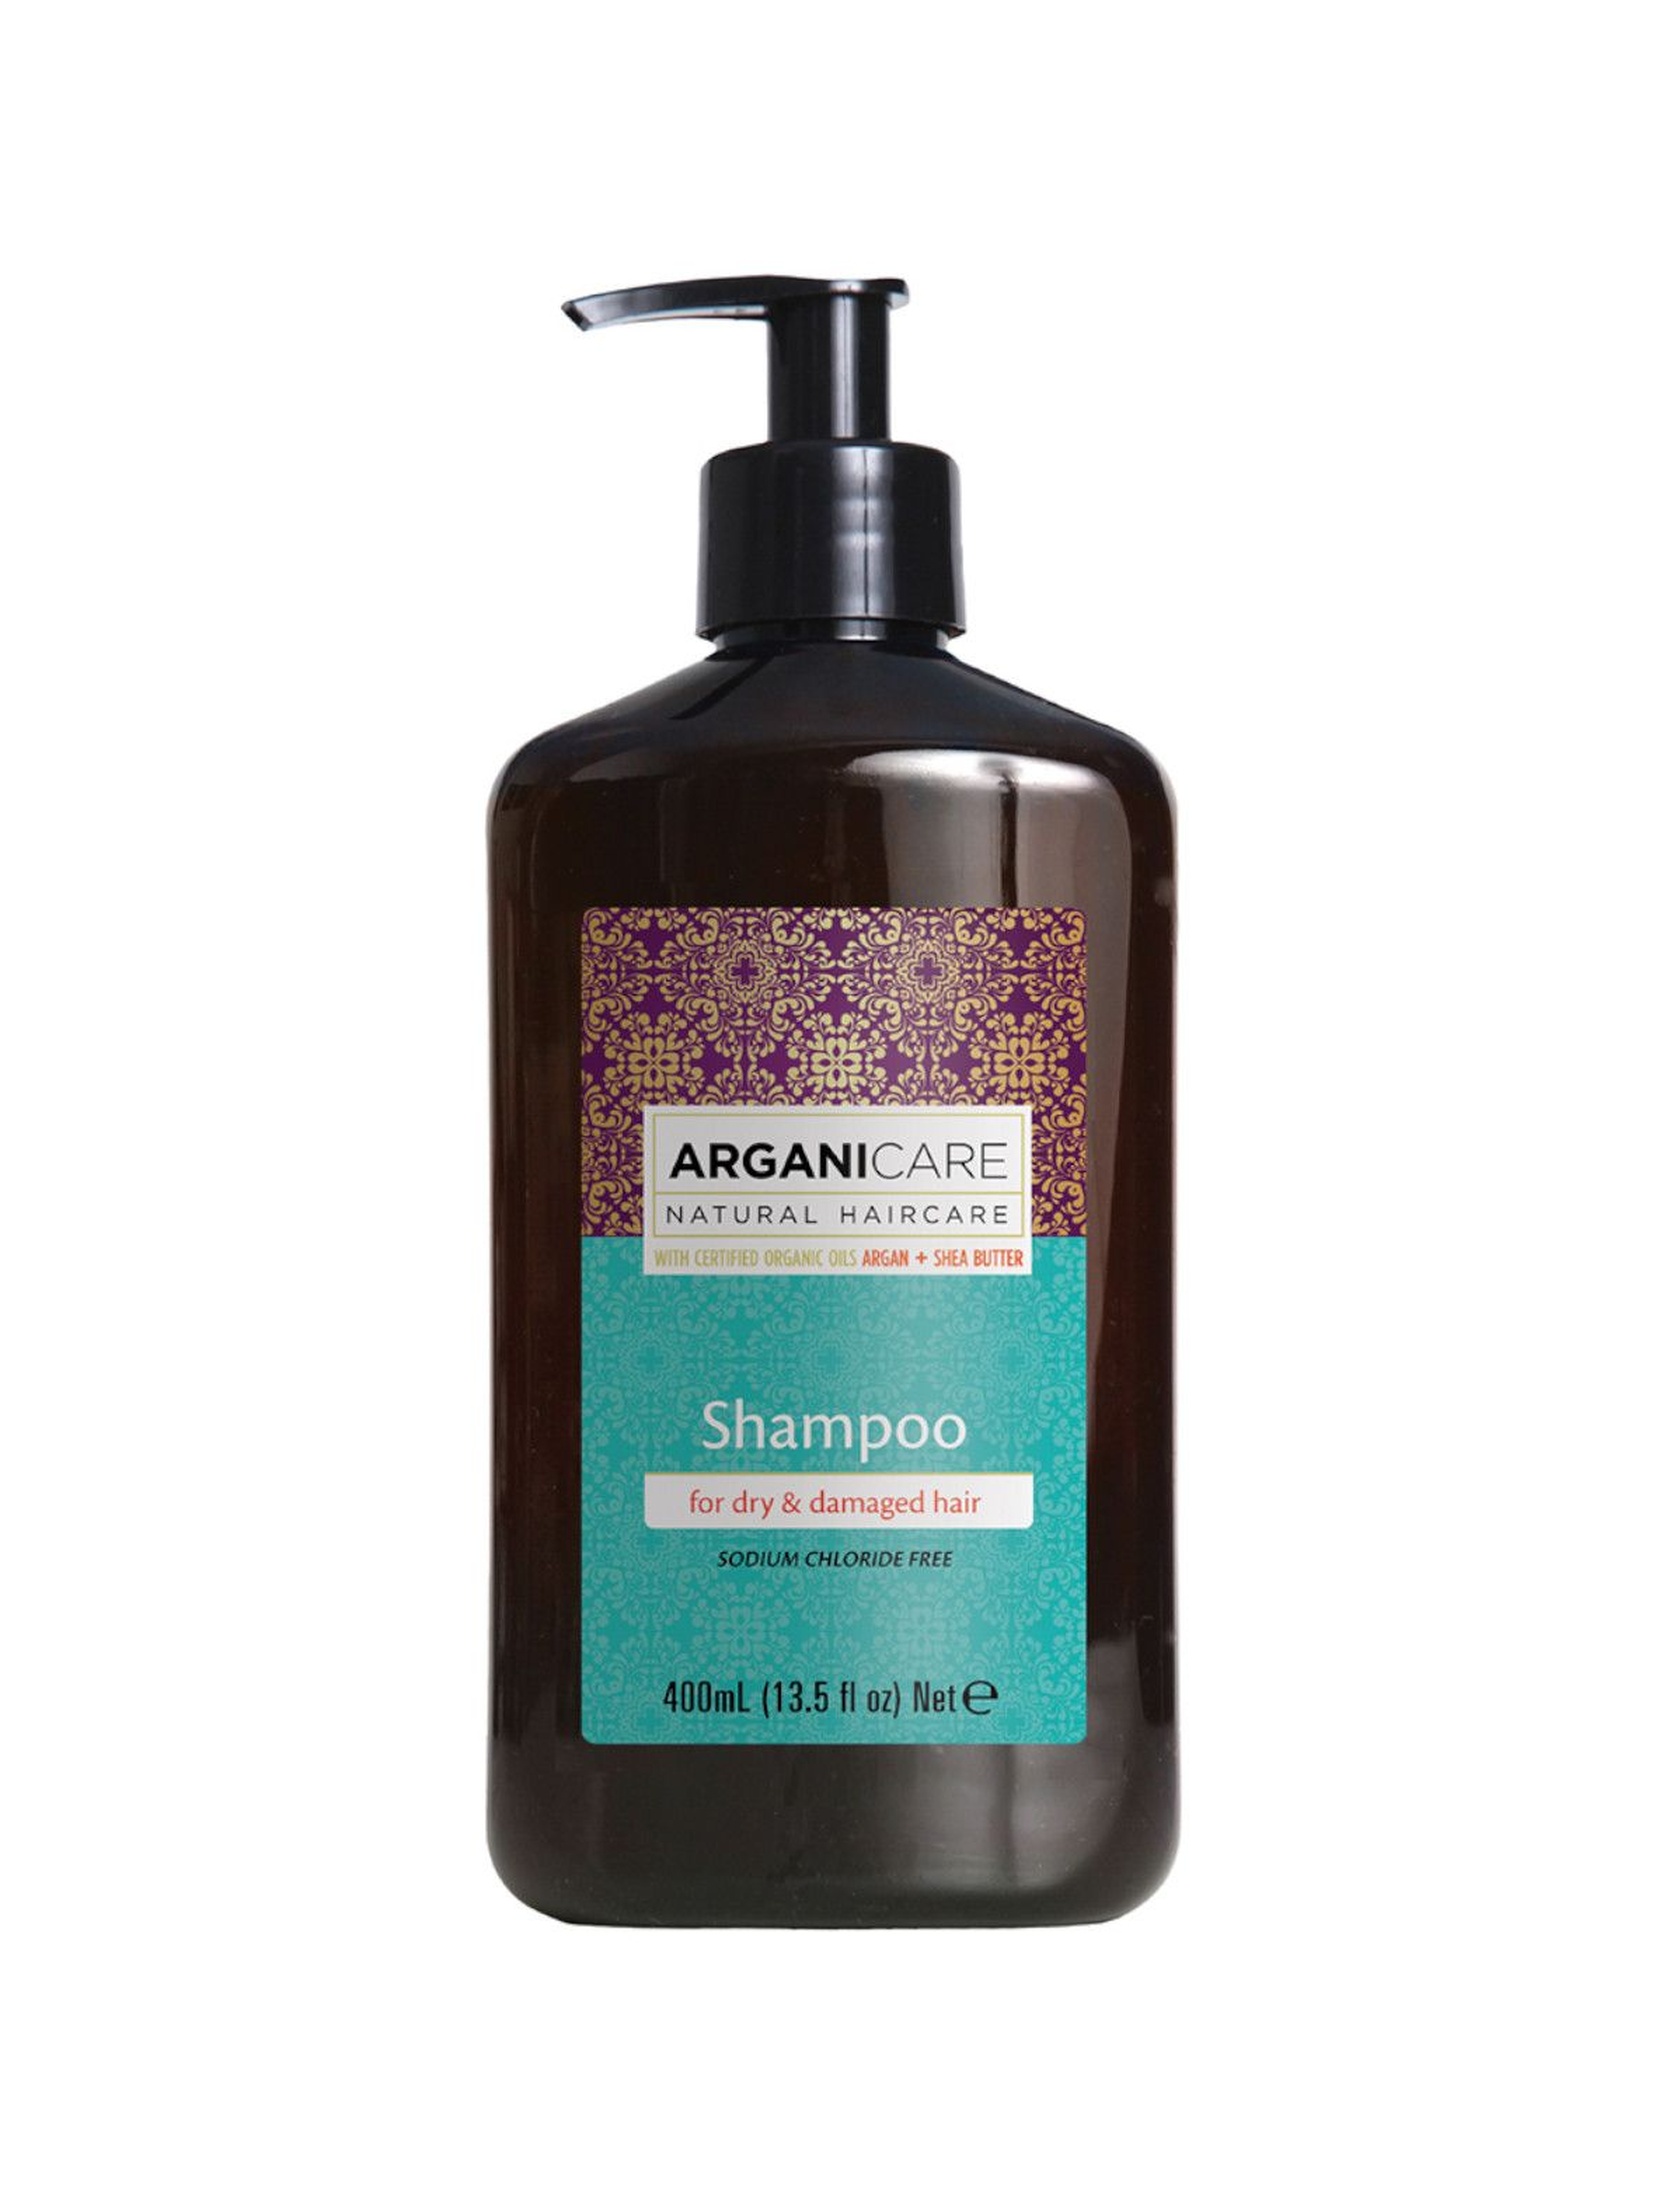 ARGANICARE NATURAL HAIRCARE Shea Butter Shampoo szampon do suchych i zniszczonych włosów  - 400 ml